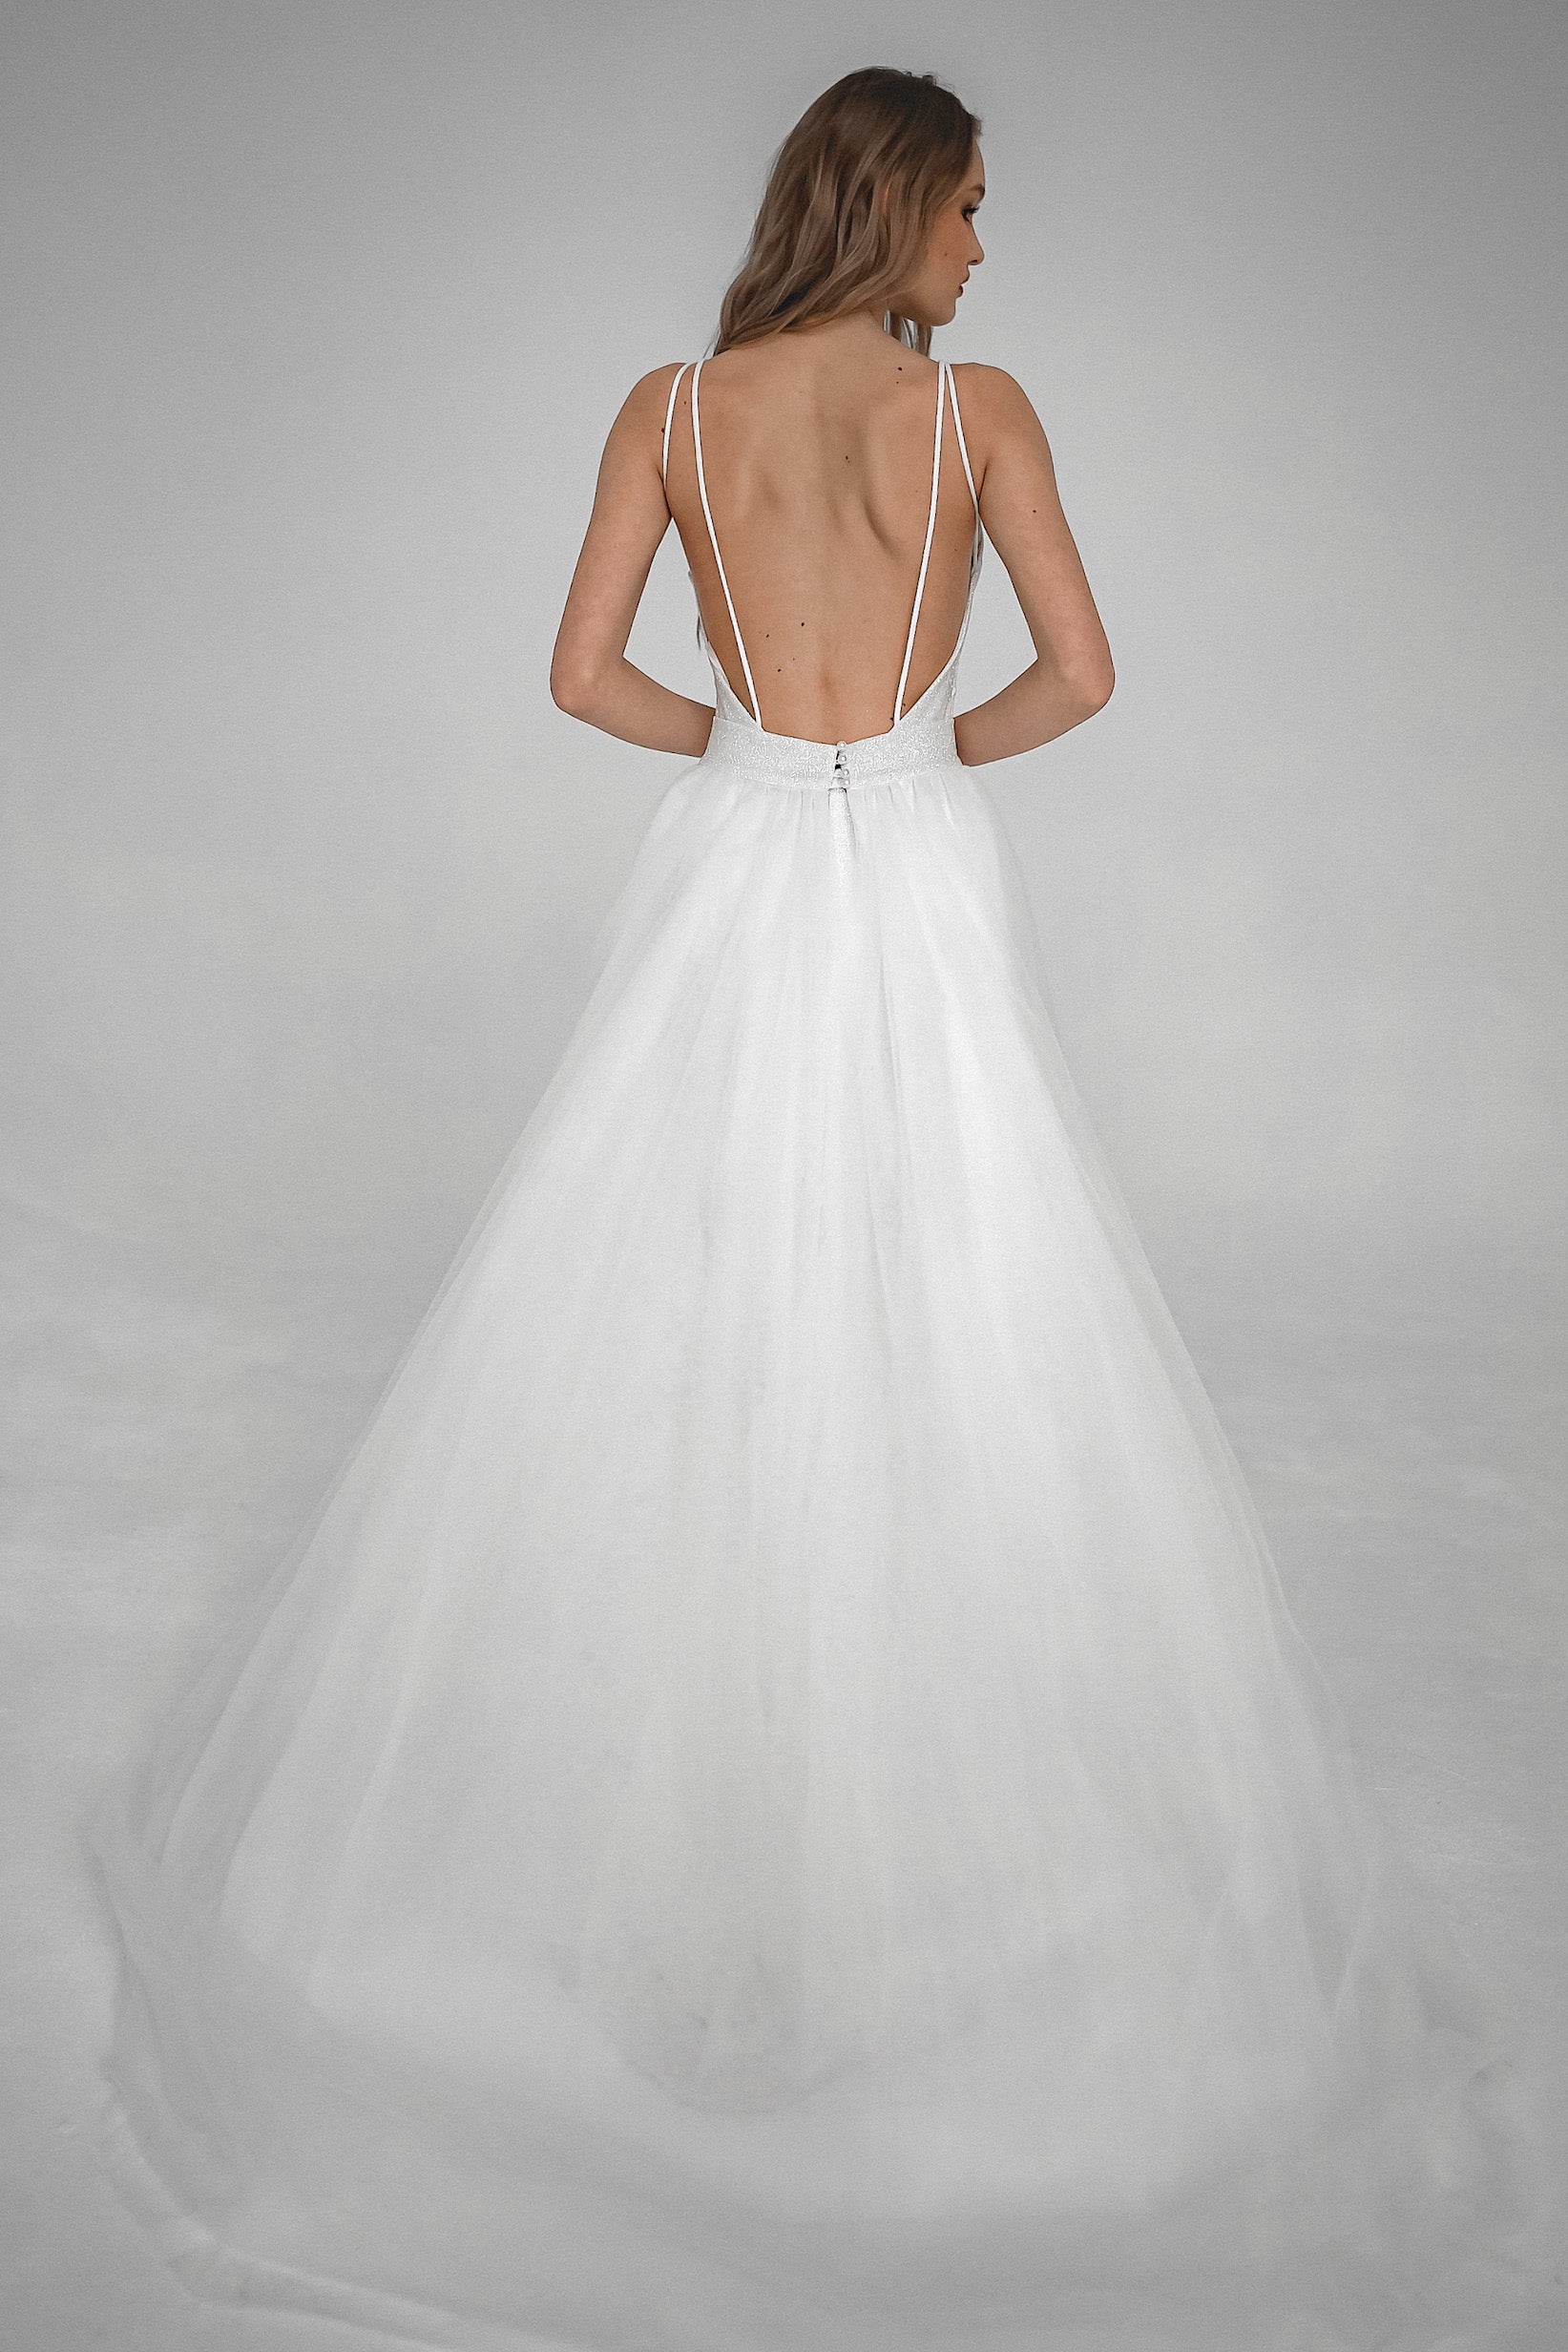 Sparkly Wedding Dress LI 305 With a Layered Tulle Skirt – Olivia Bottega